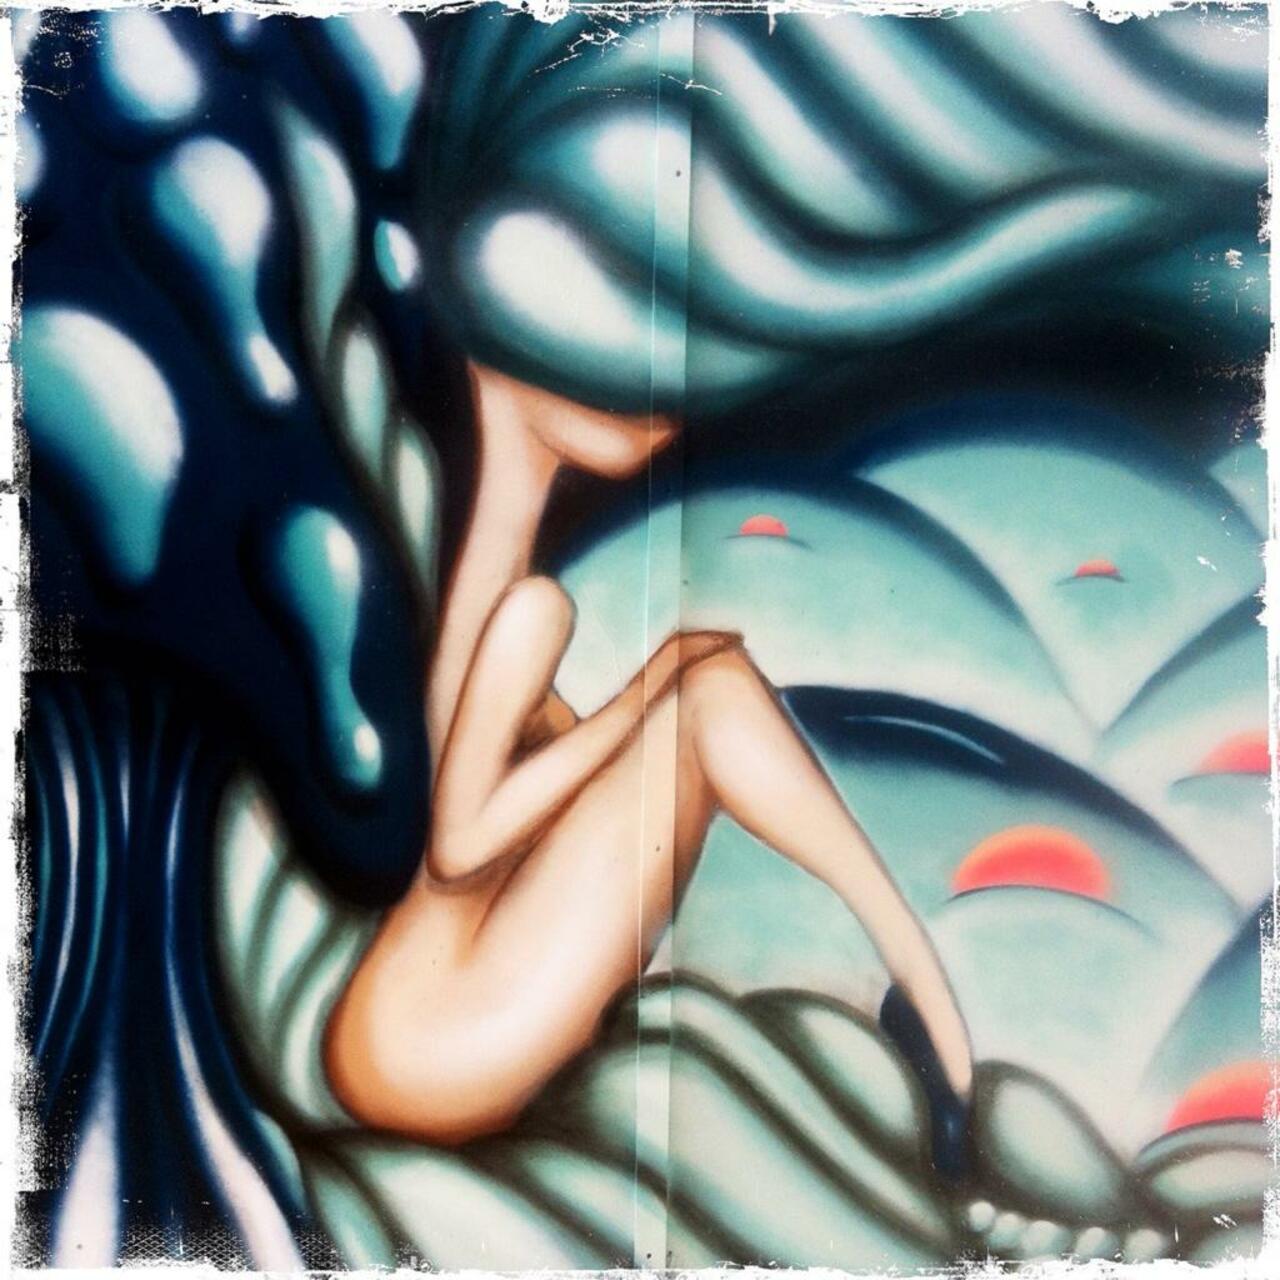 Lovely piece by #VanesaLongchamp in Leonard Street #art #streetart #graffiti http://t.co/UeUHXF9SHI